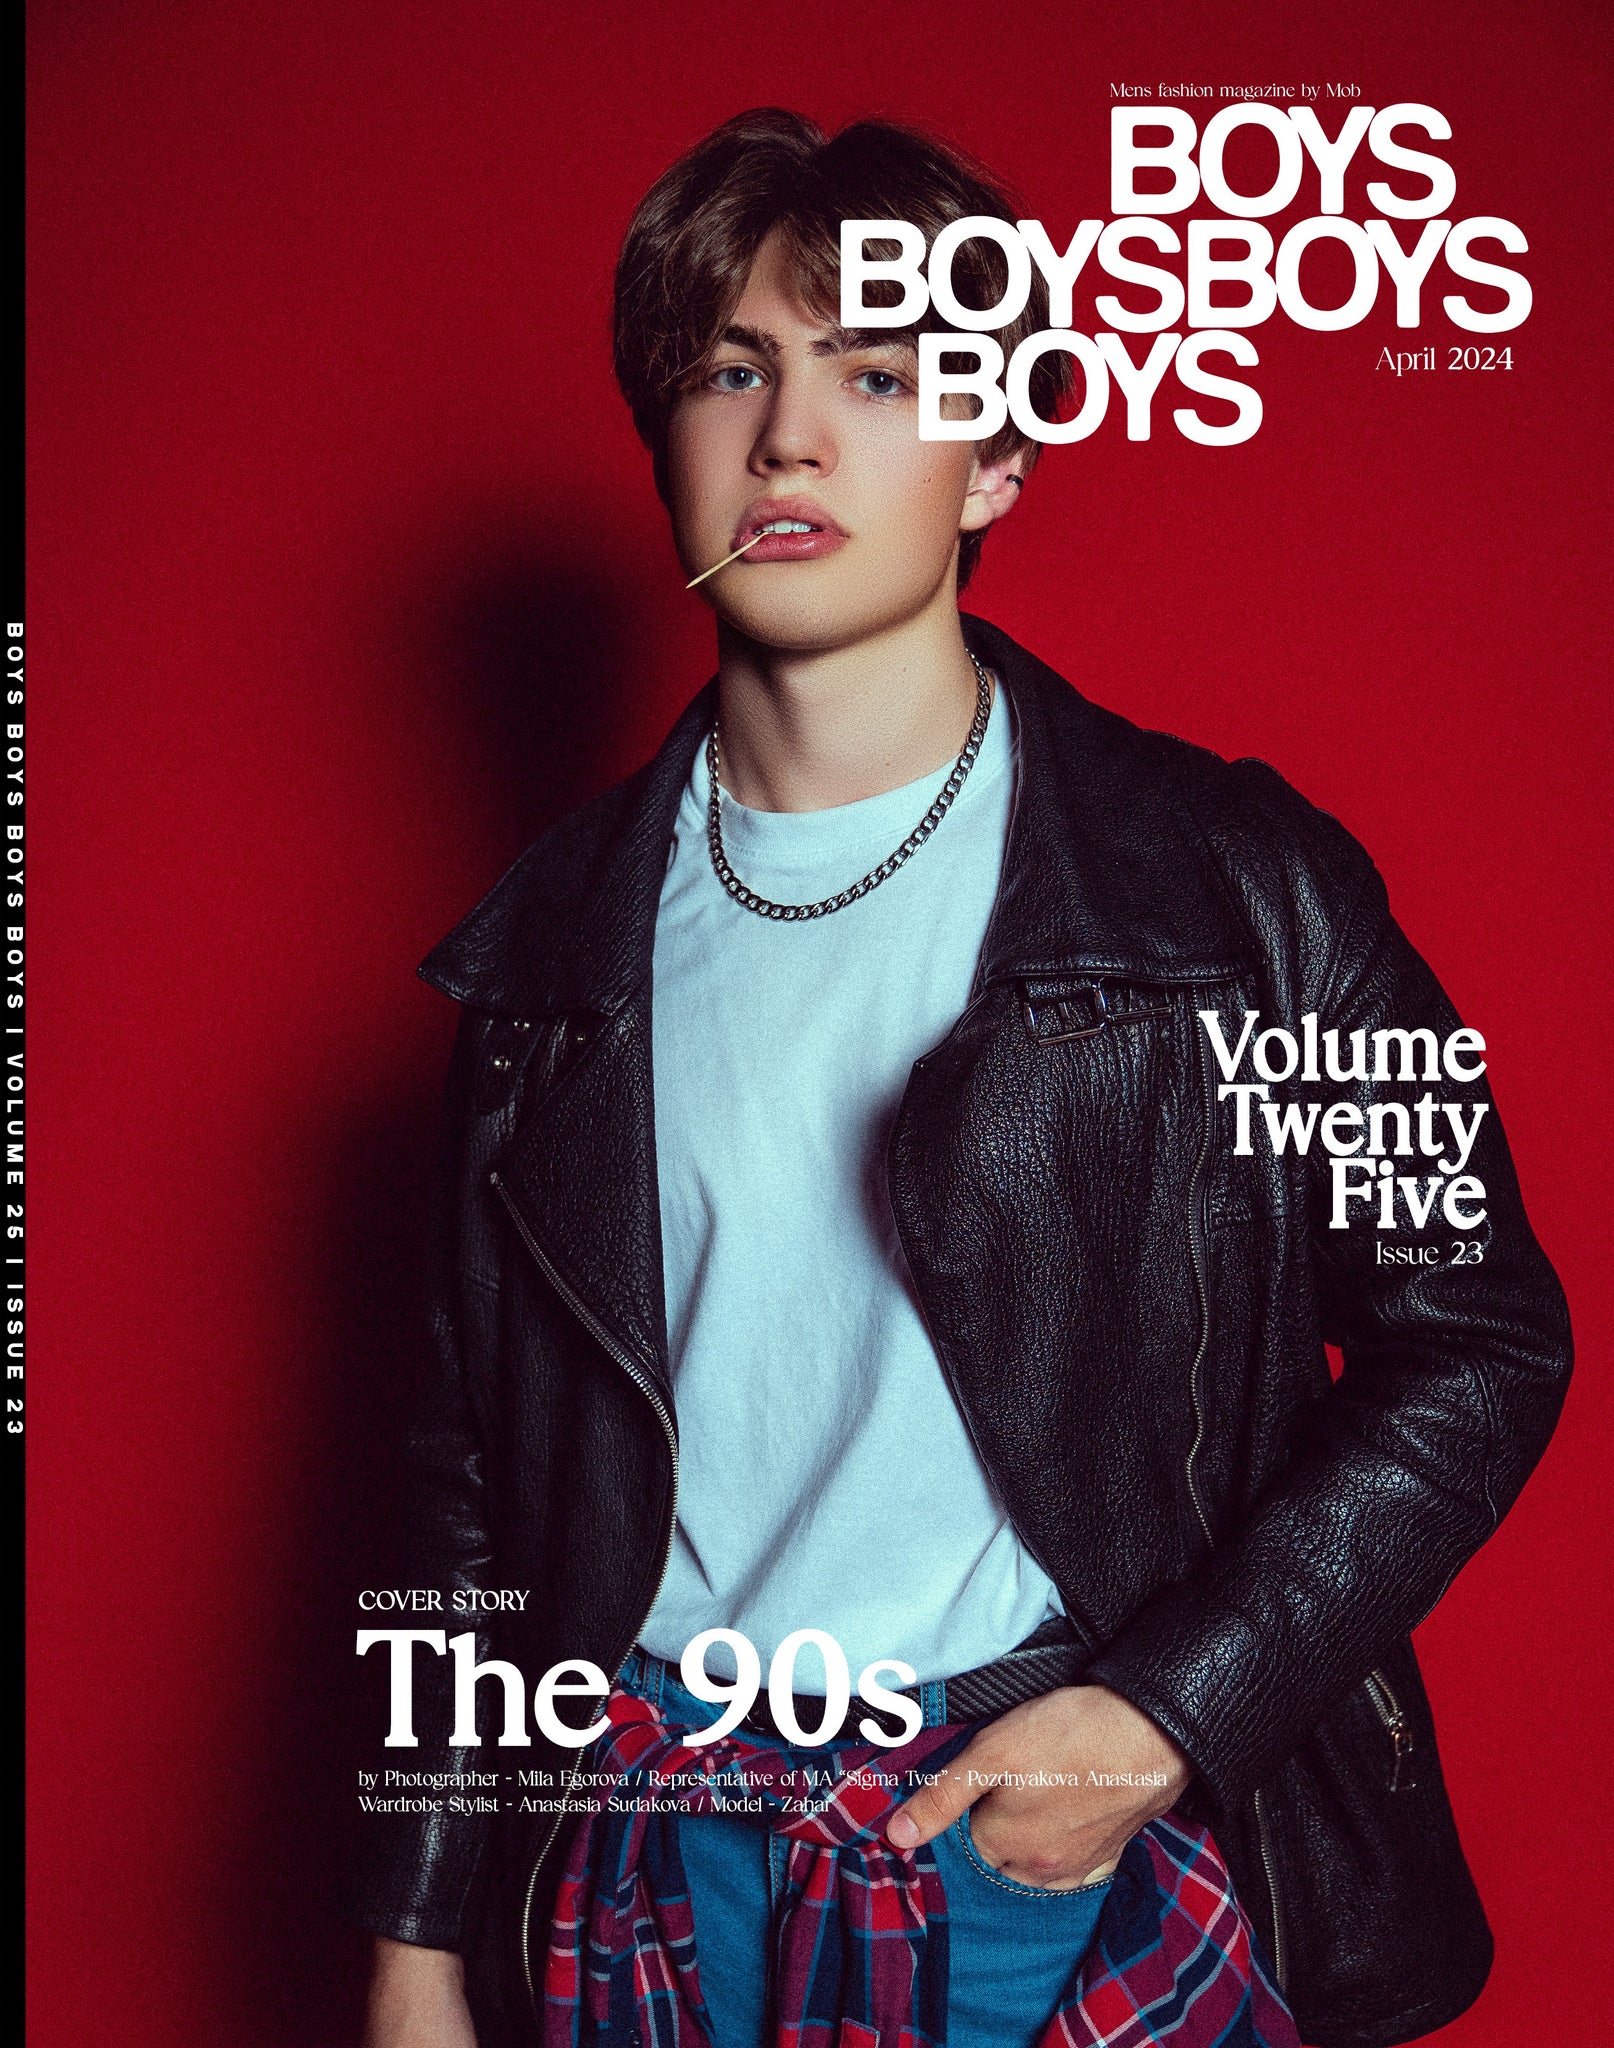 BOYS BOYS BOYS BOYS | VOLUME TWENTY FIVE | ISSUE #23